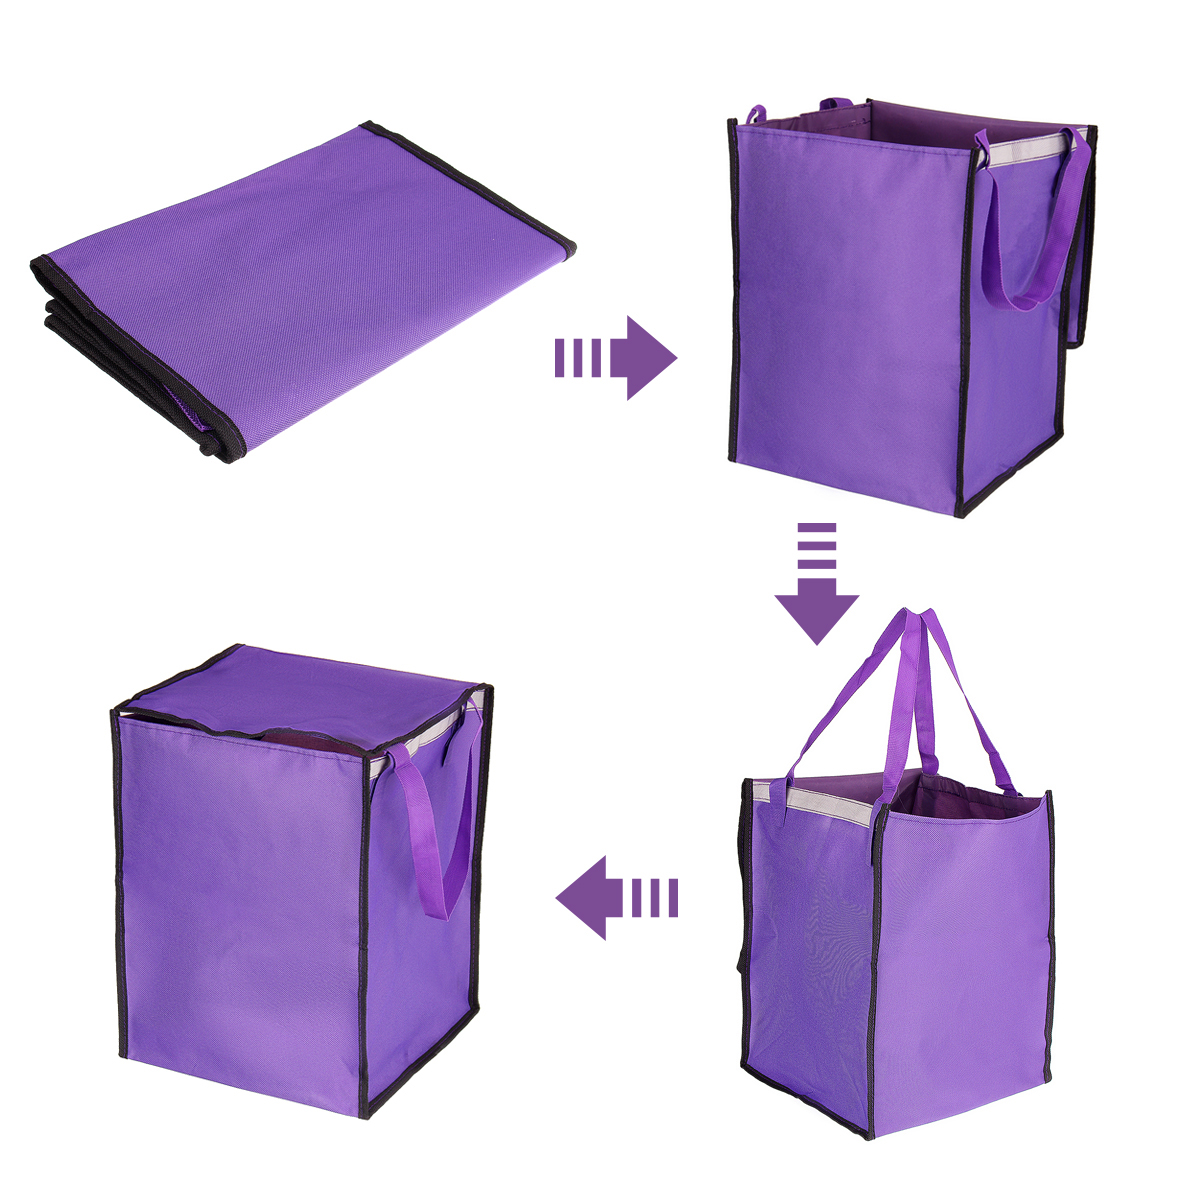 Shopping-Cart-Fabric-Bag-Portable-Folding-Oxford-Trolley-Rolling-Bag-Luggage-1800115-4